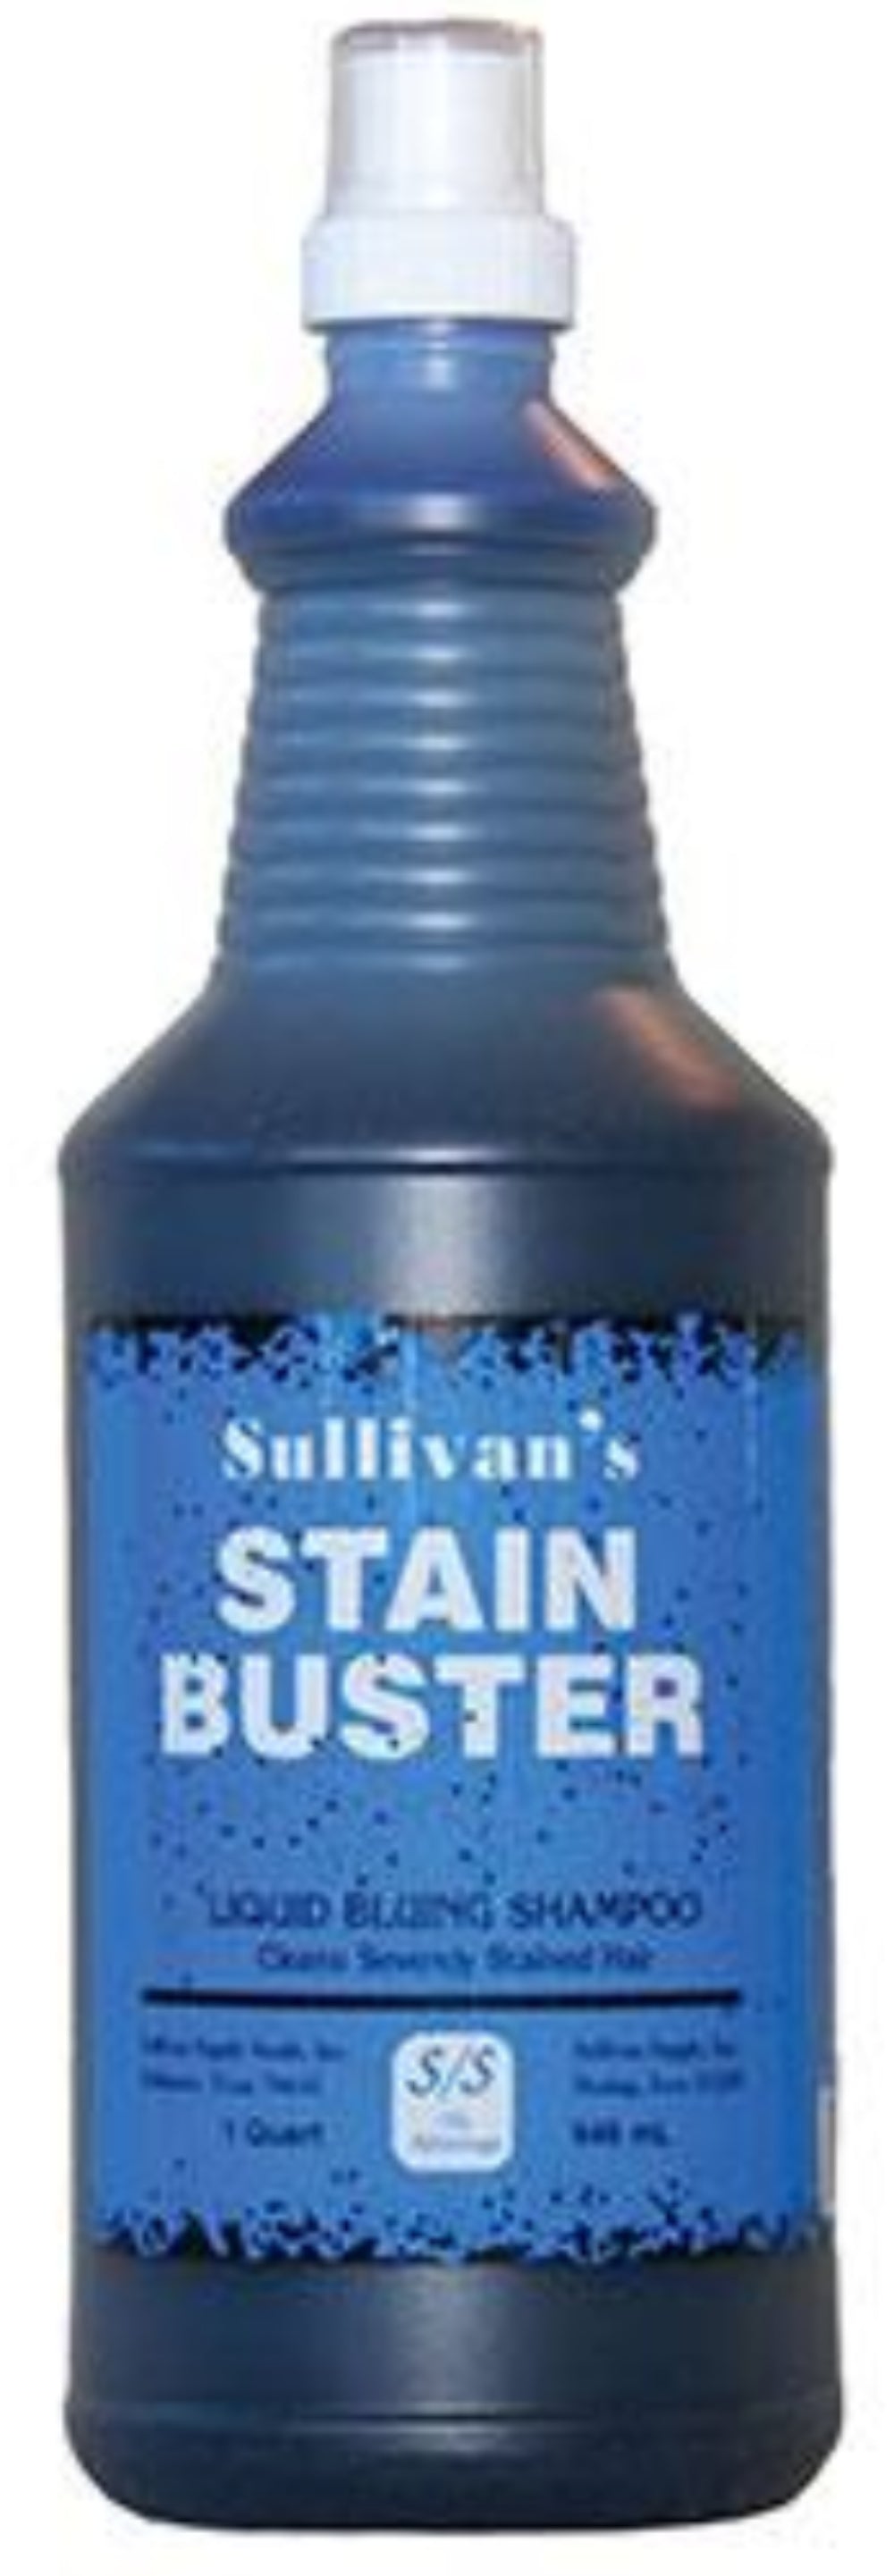 Sullivan's Stain Buster Livestock - Show Supplies Sullivan's Supply   